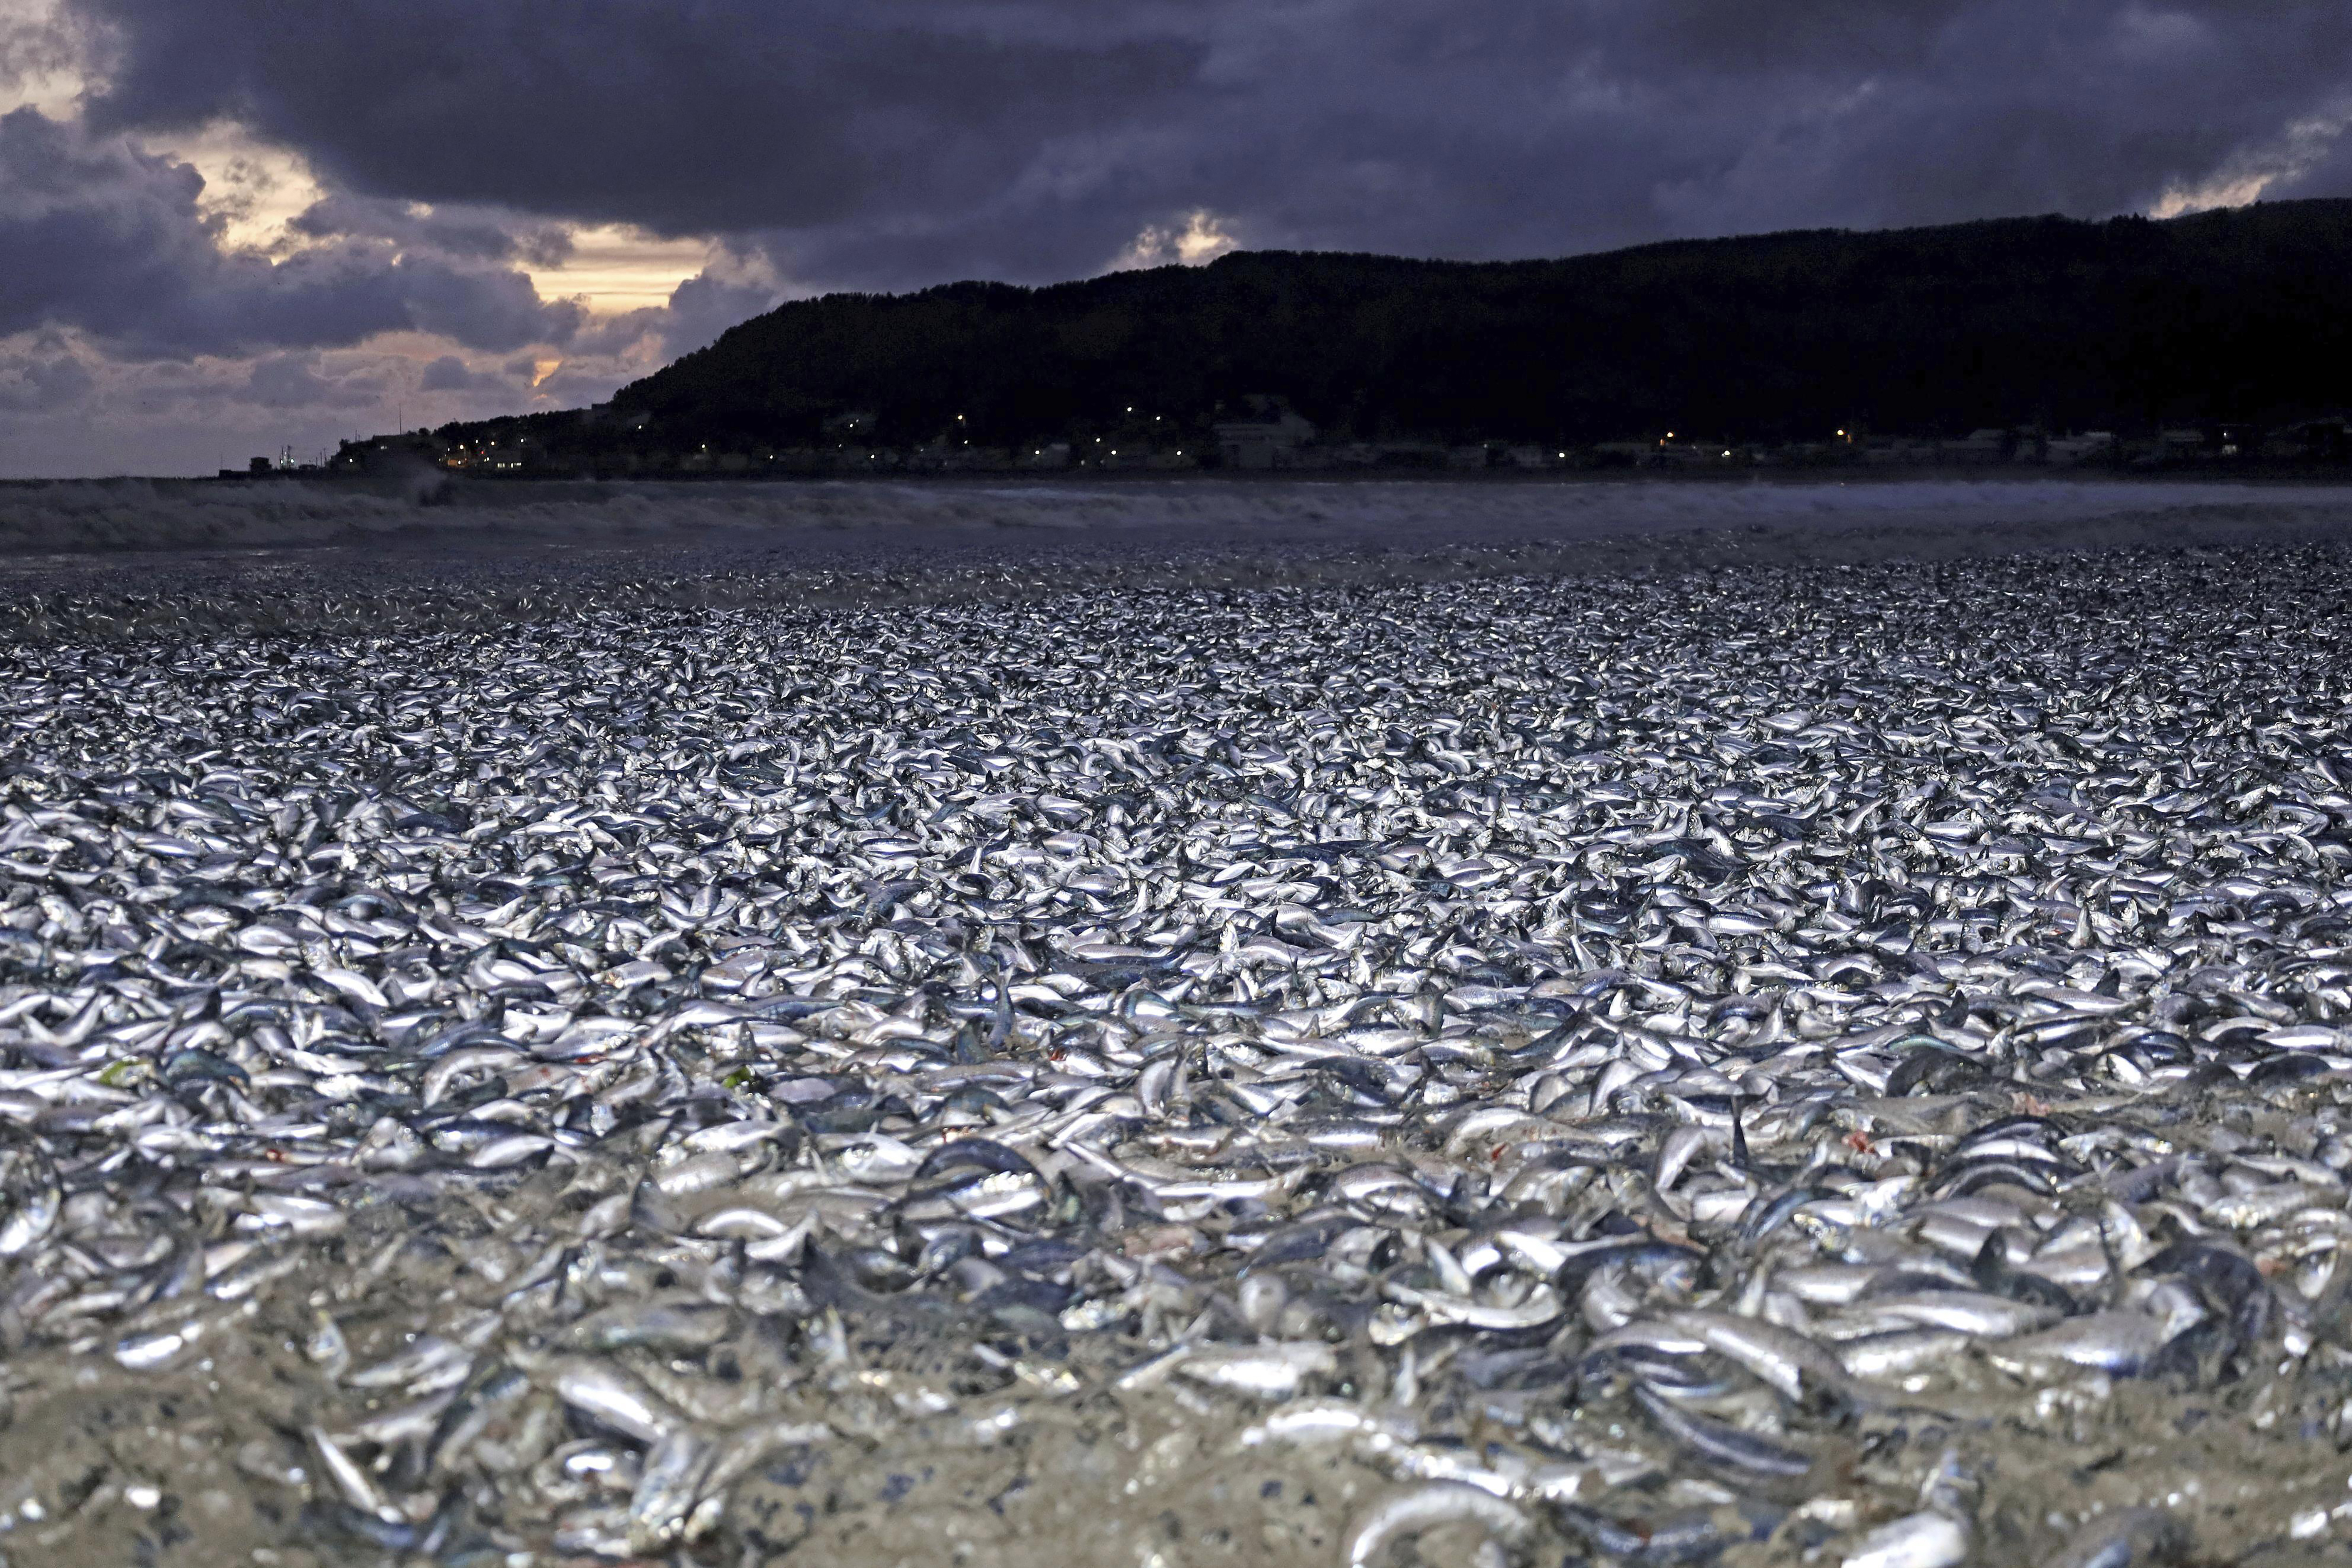 Japan Fish Dead In Beach